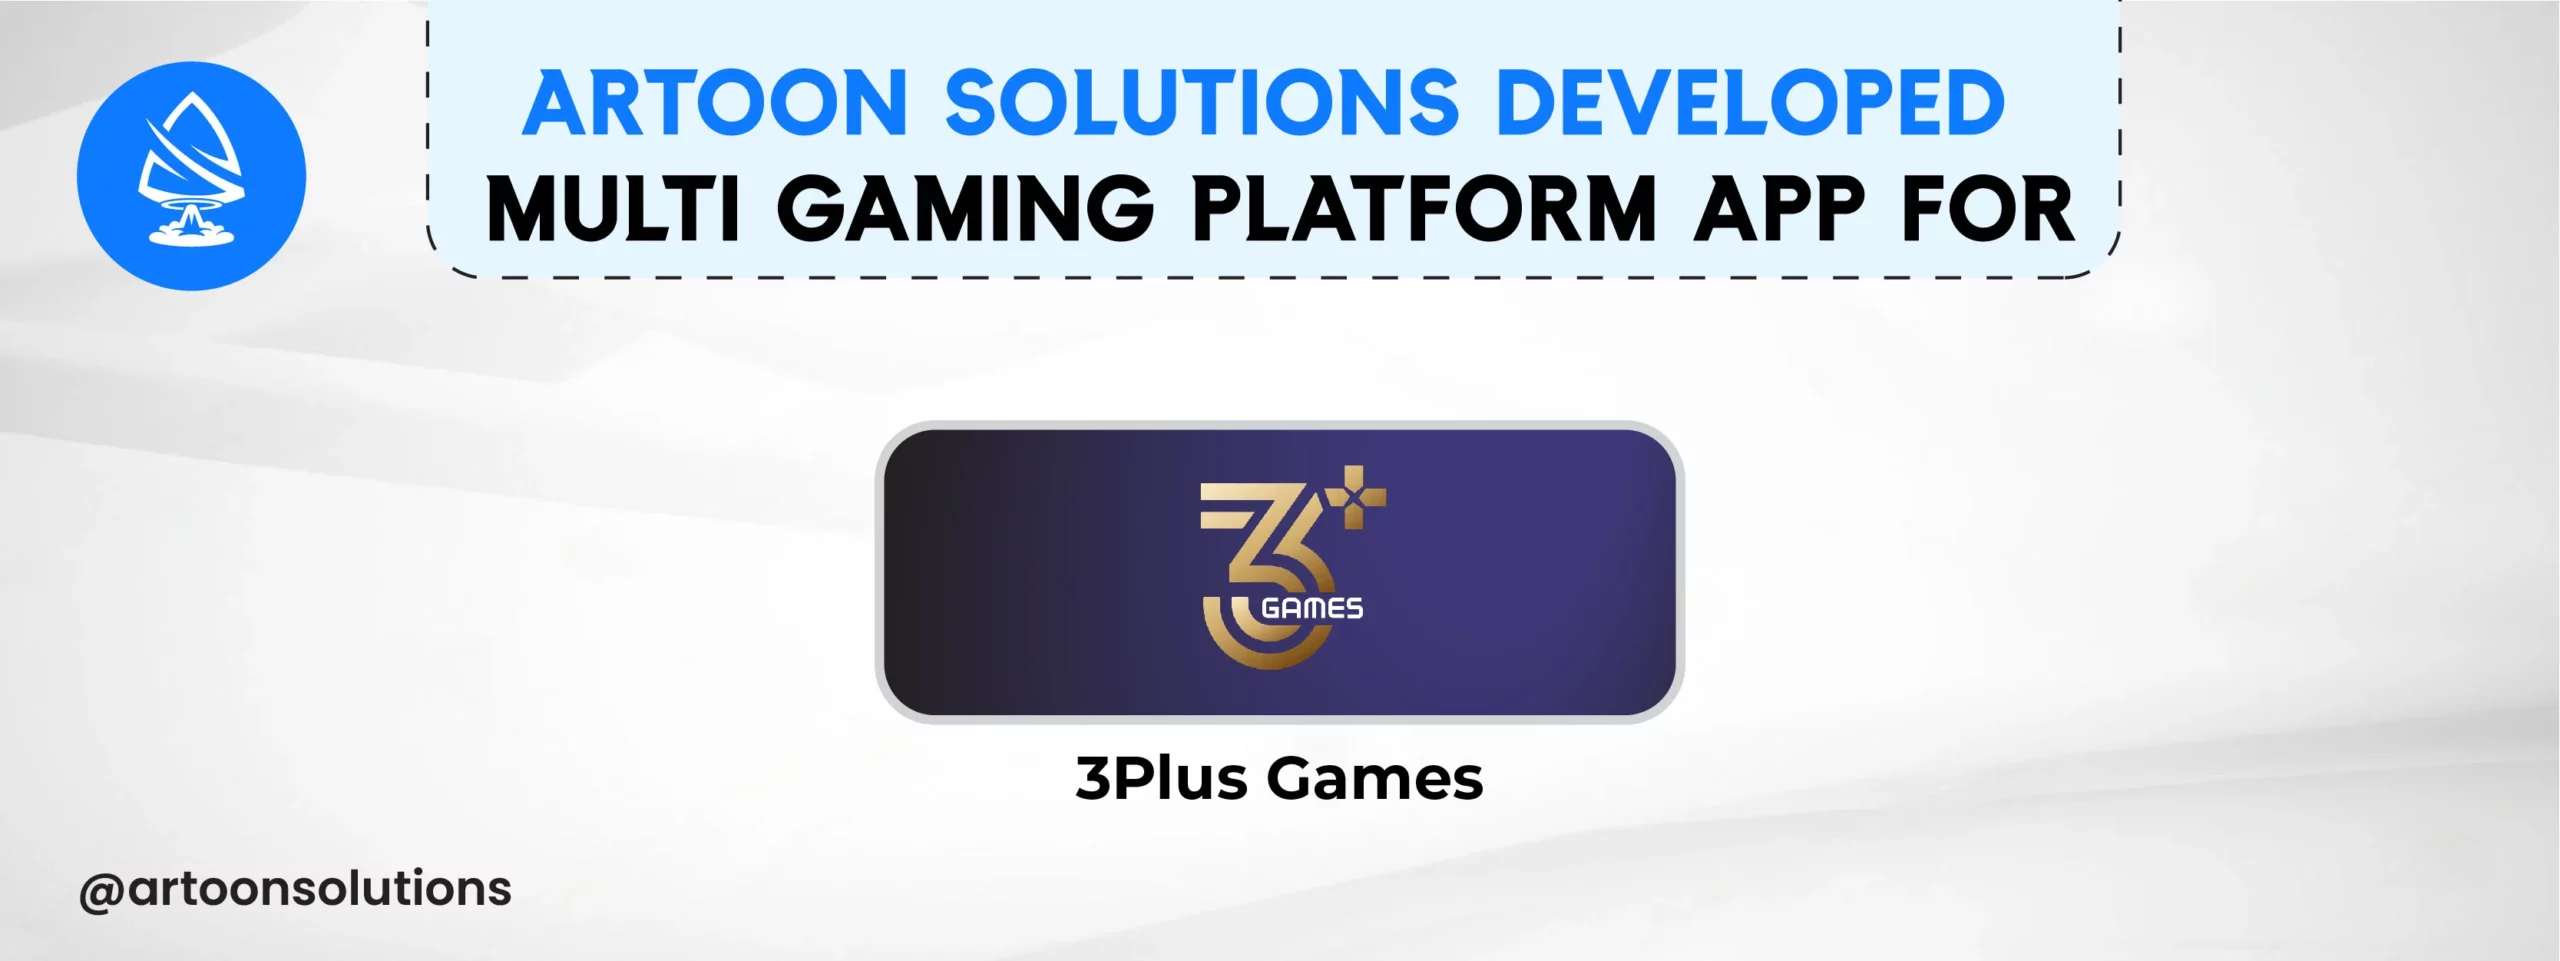 Artoon Solutions Developed Multigaming Platform App for 3Plus Games